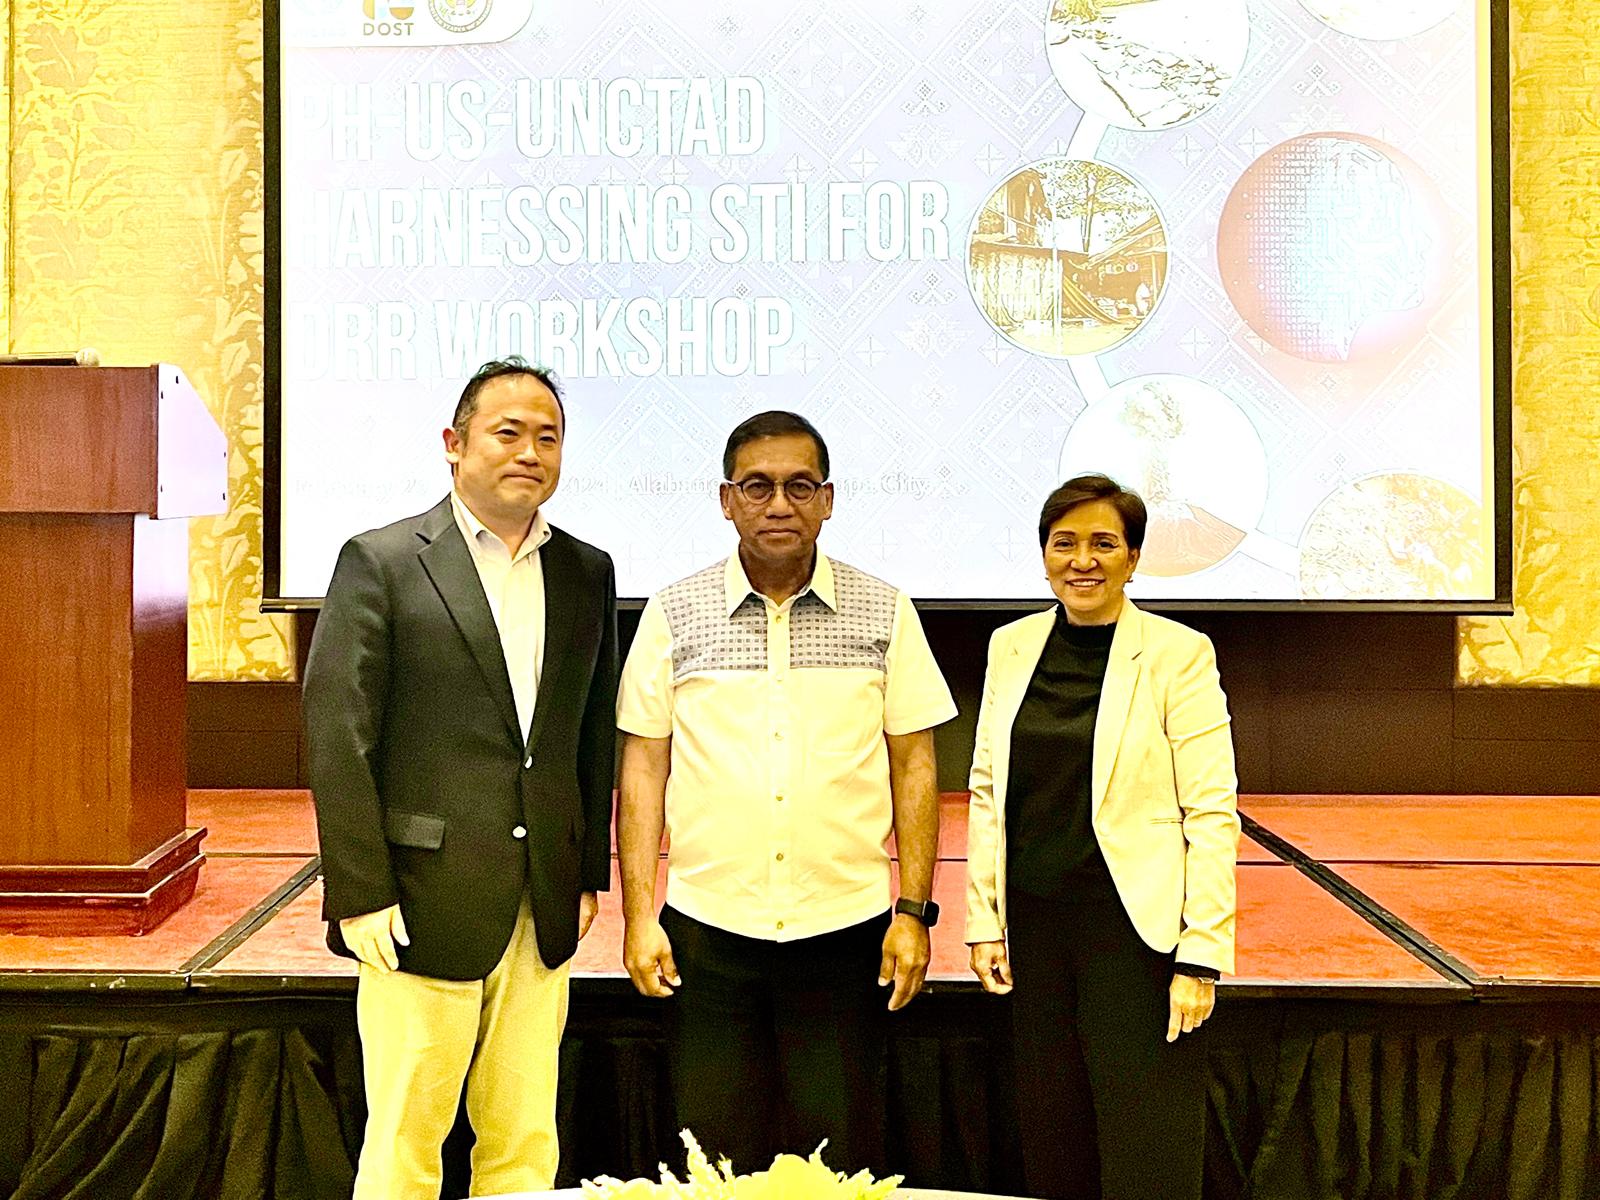 Photo with Secretary Dr. Renato Solidum Jr. and Undersecretary Dr. Leah J. Buendia of DOST